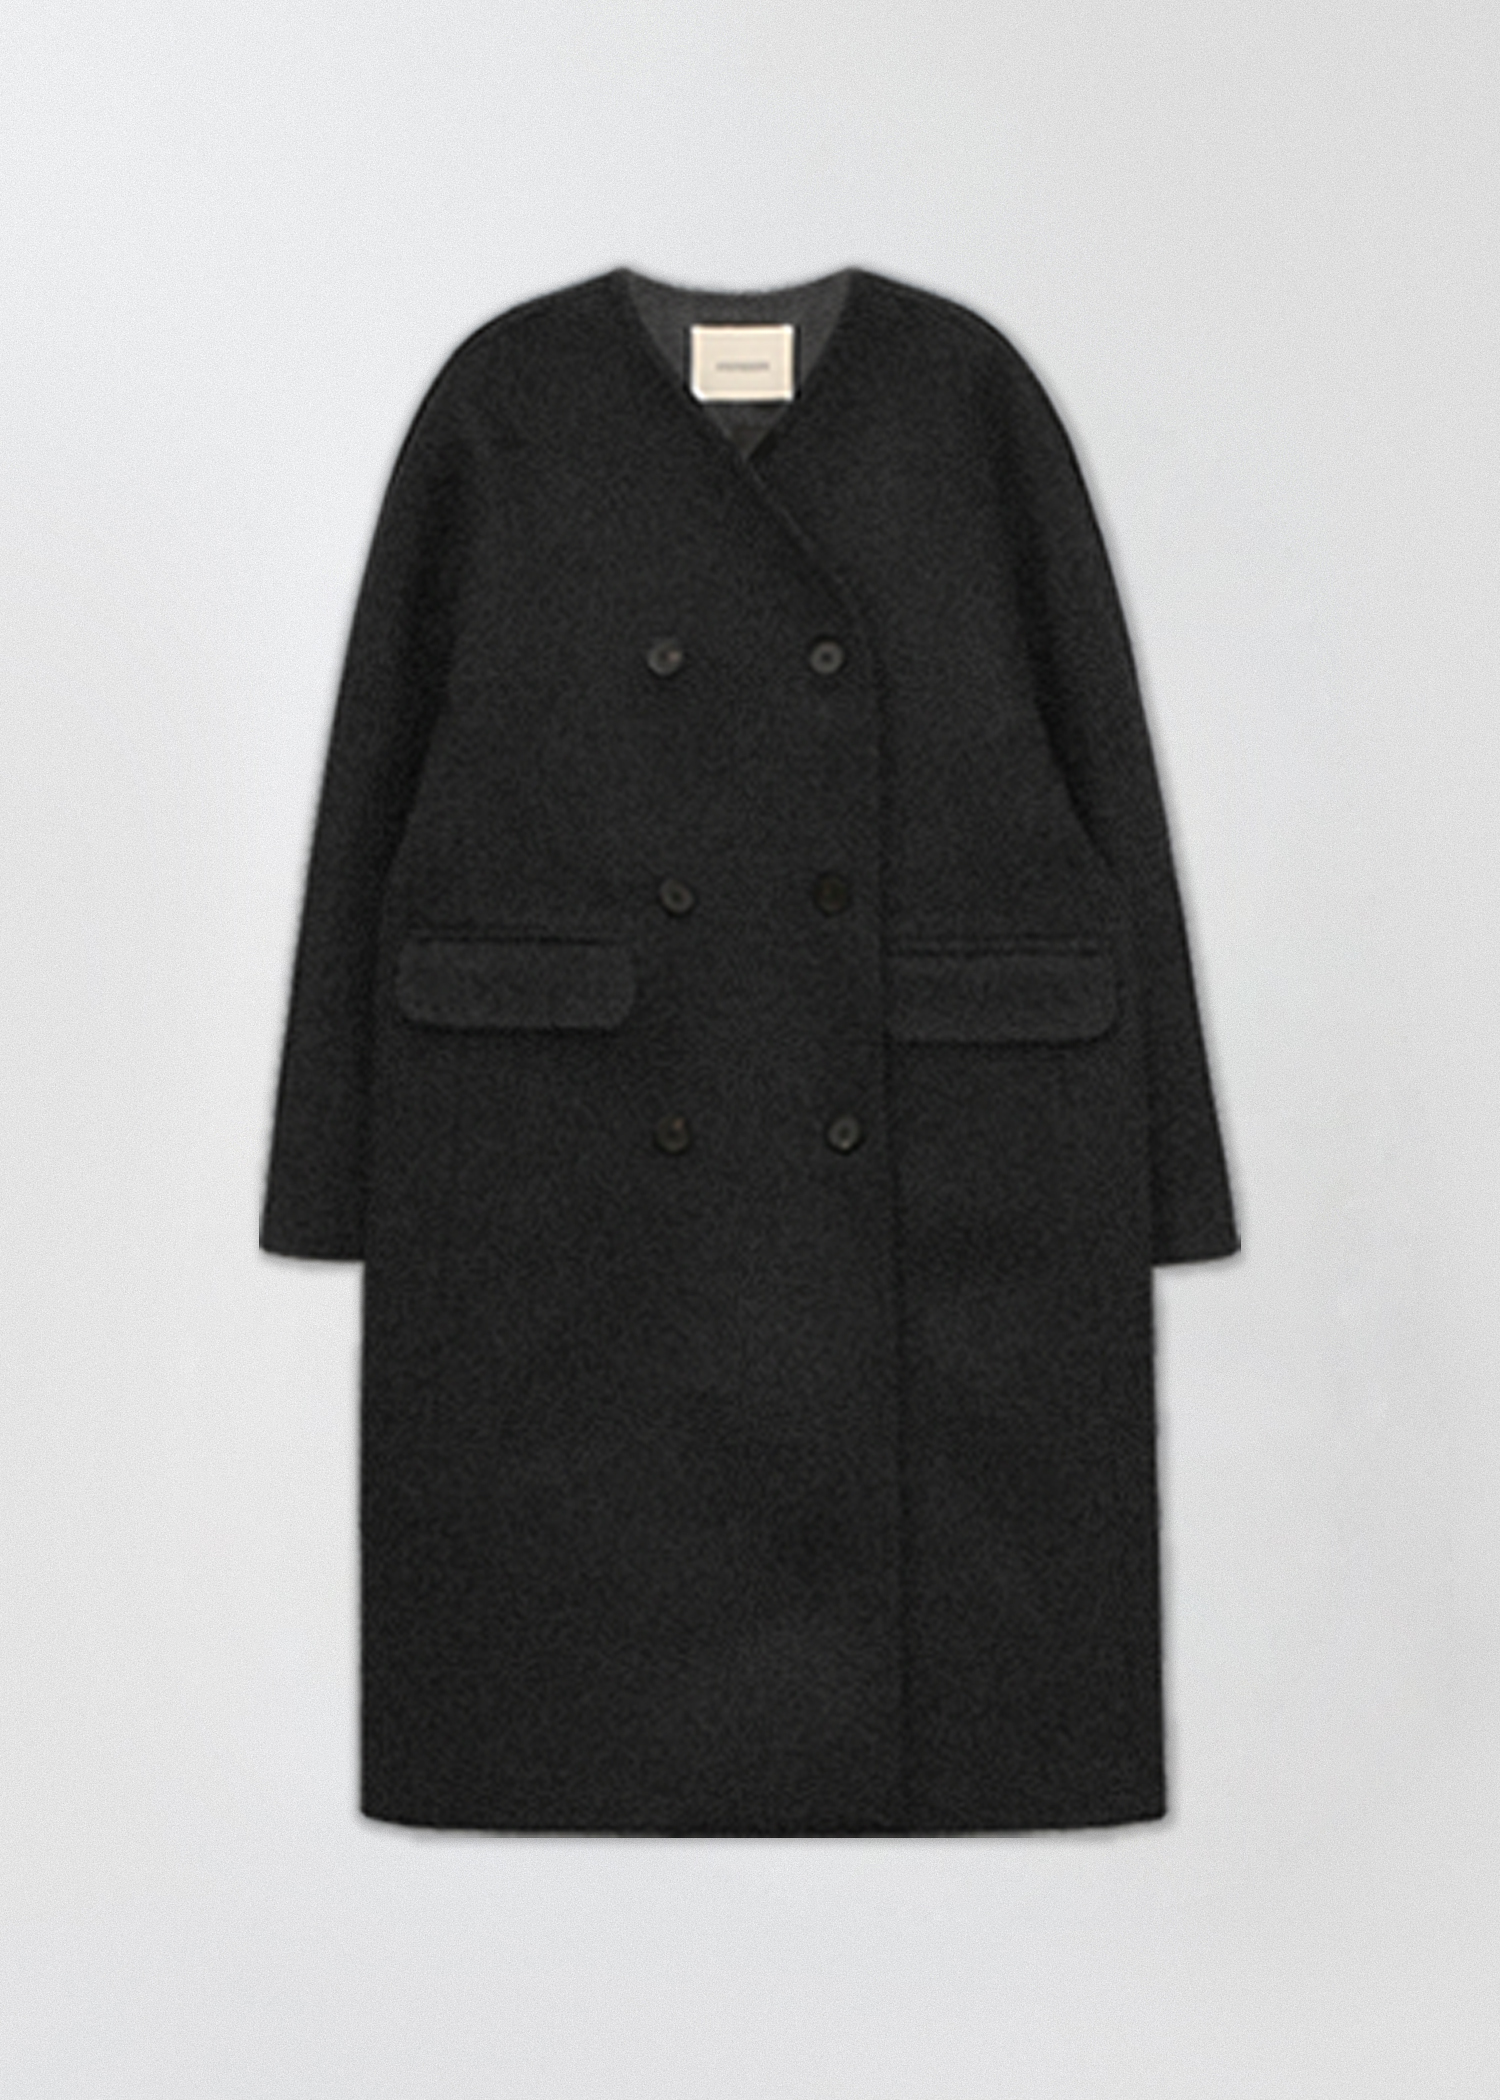 Collarless long coat (charcoal)